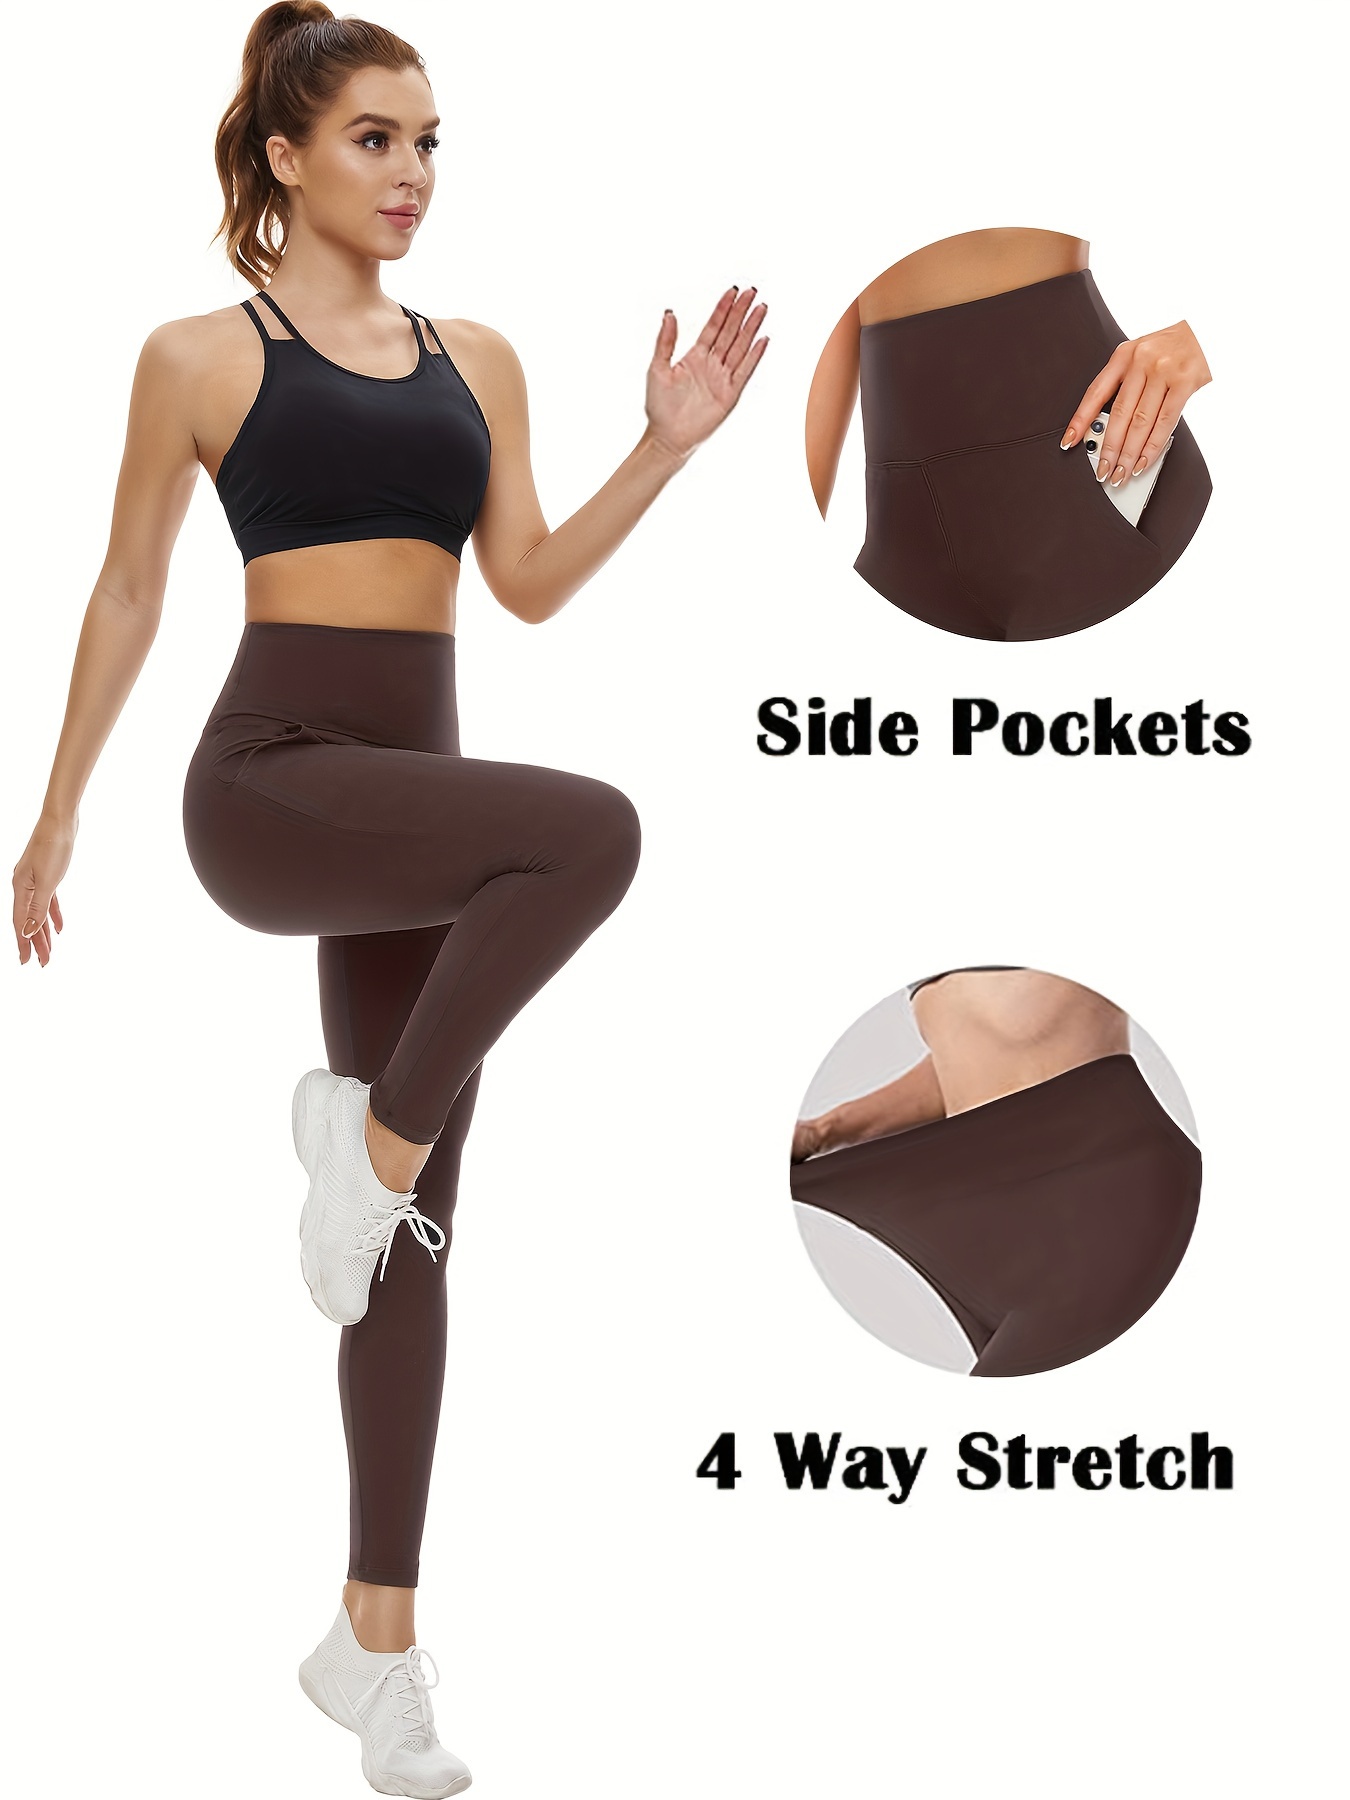 Aoliks Women's Capri Leggings High Waisted Side Pockets Workout Pants Teal